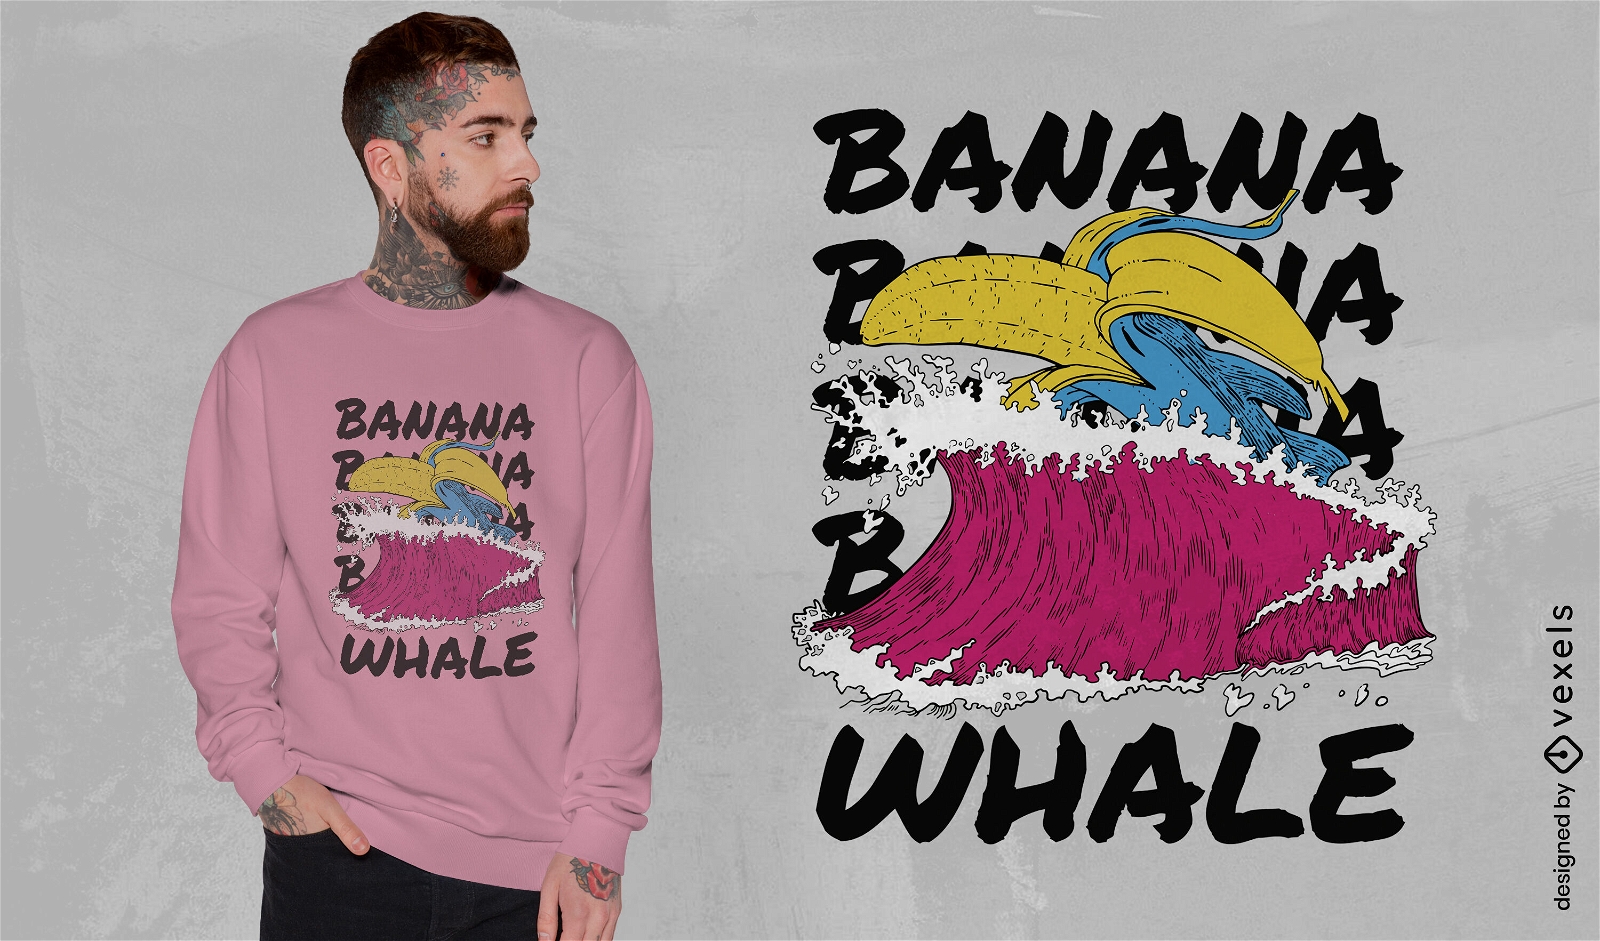 Banana whale surfing t-shirt design